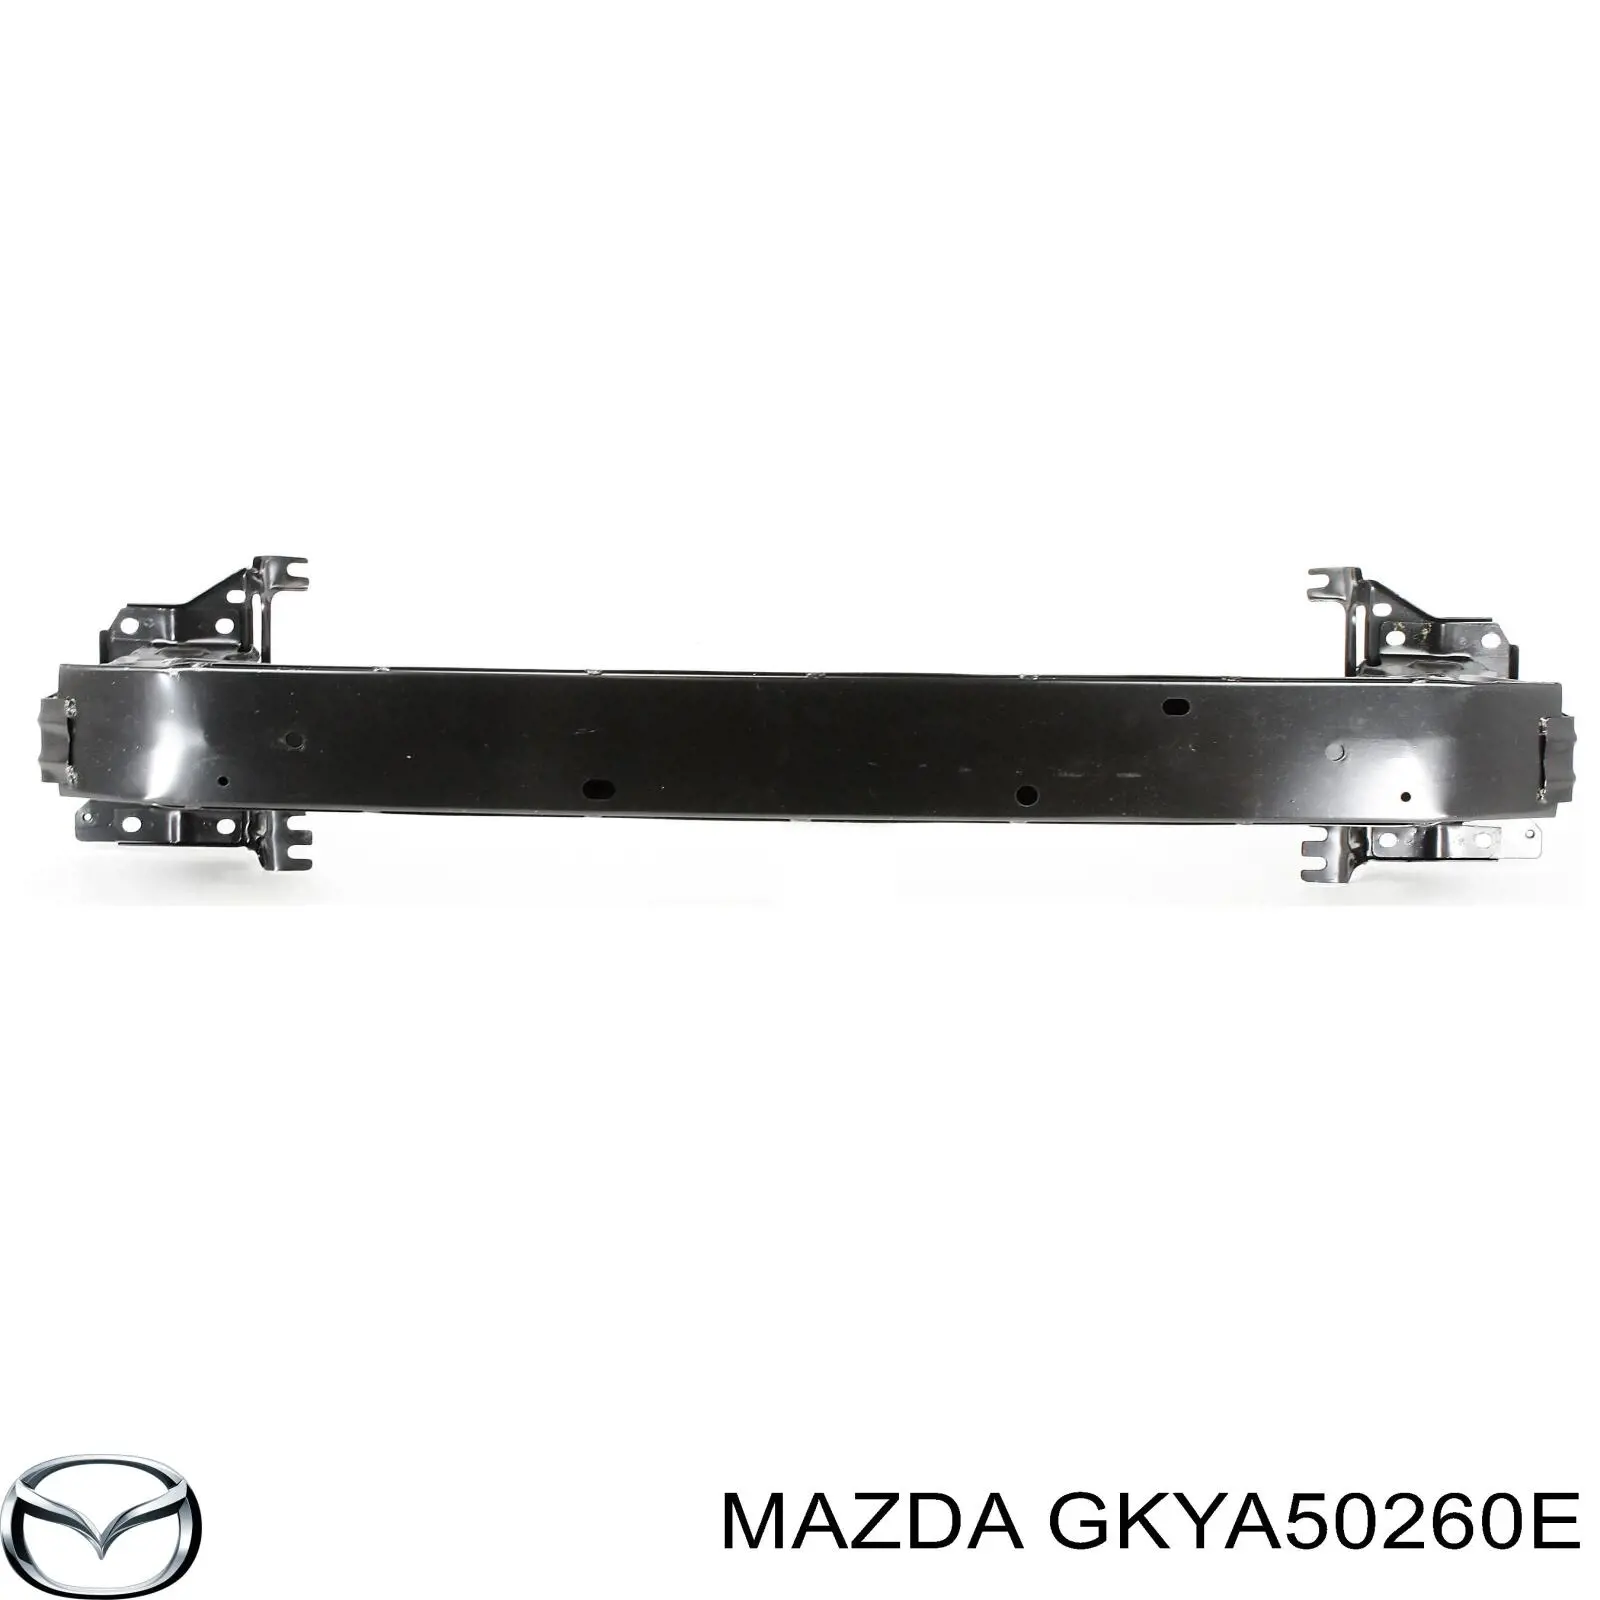 GKYA50260E Mazda refuerzo parachoques trasero